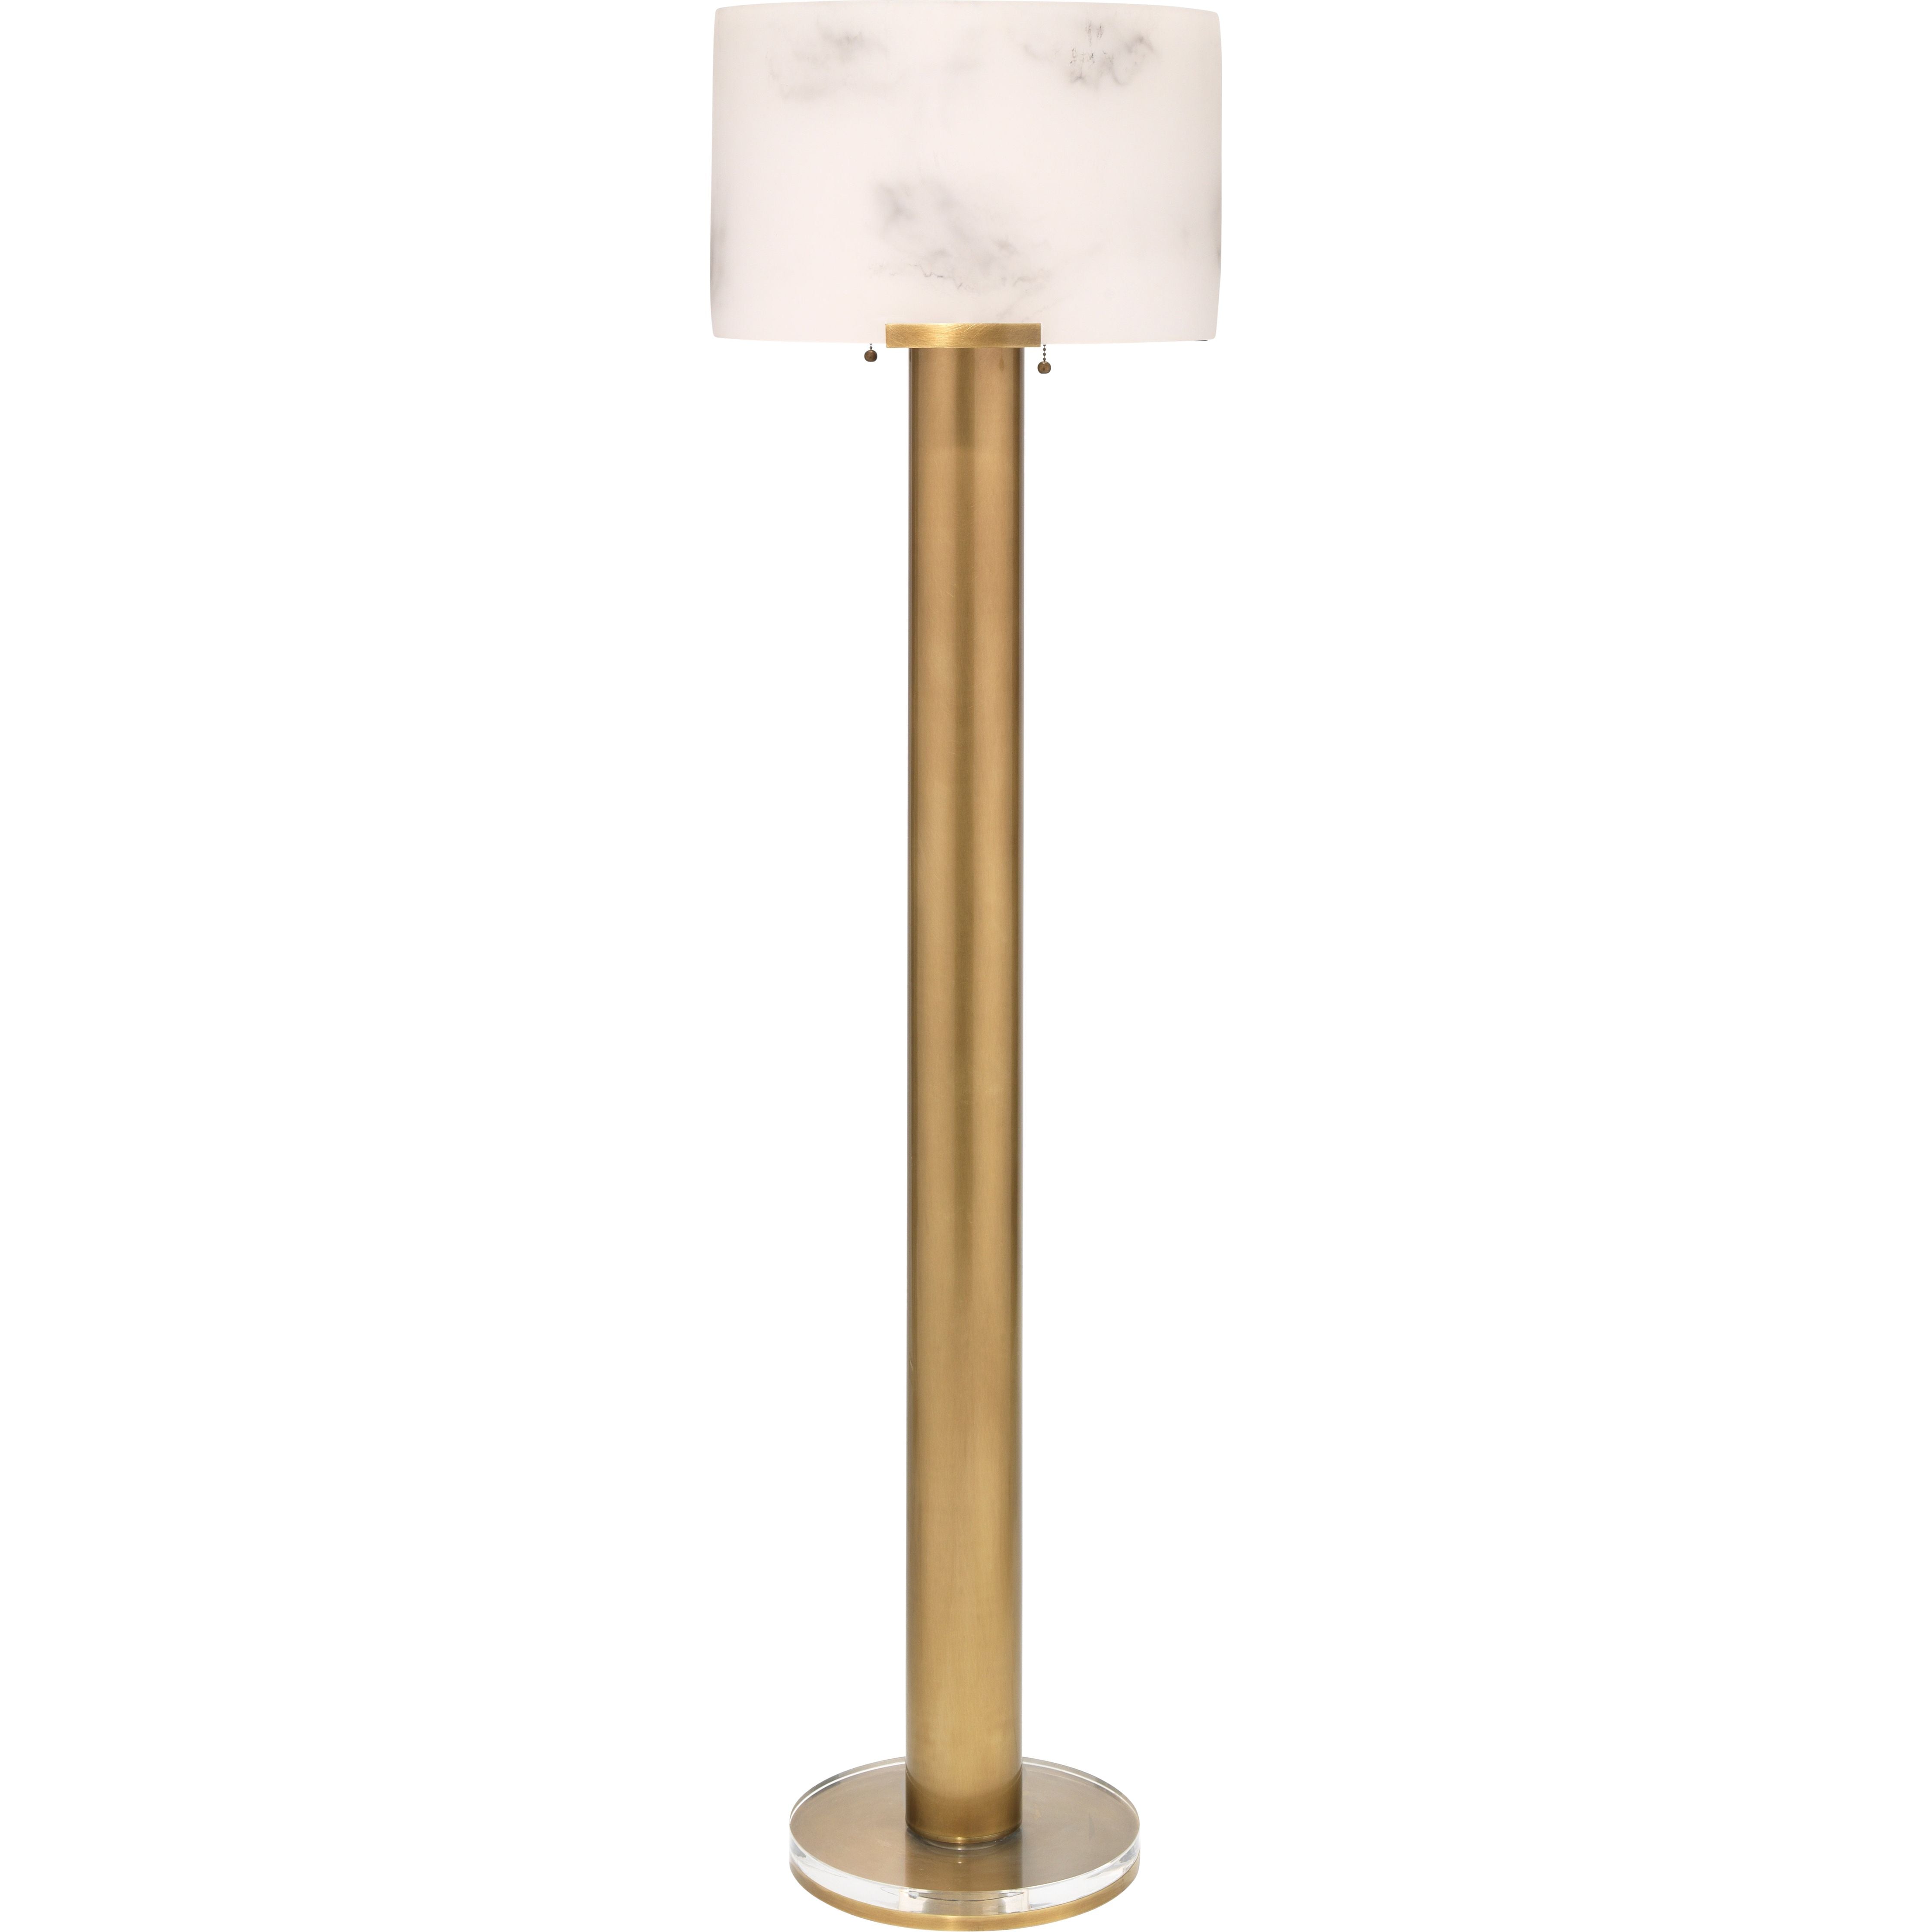 Jamie Young Company - 9ELANFLALAB - Elancourt Floor Lamp -  - Antique Brass, White